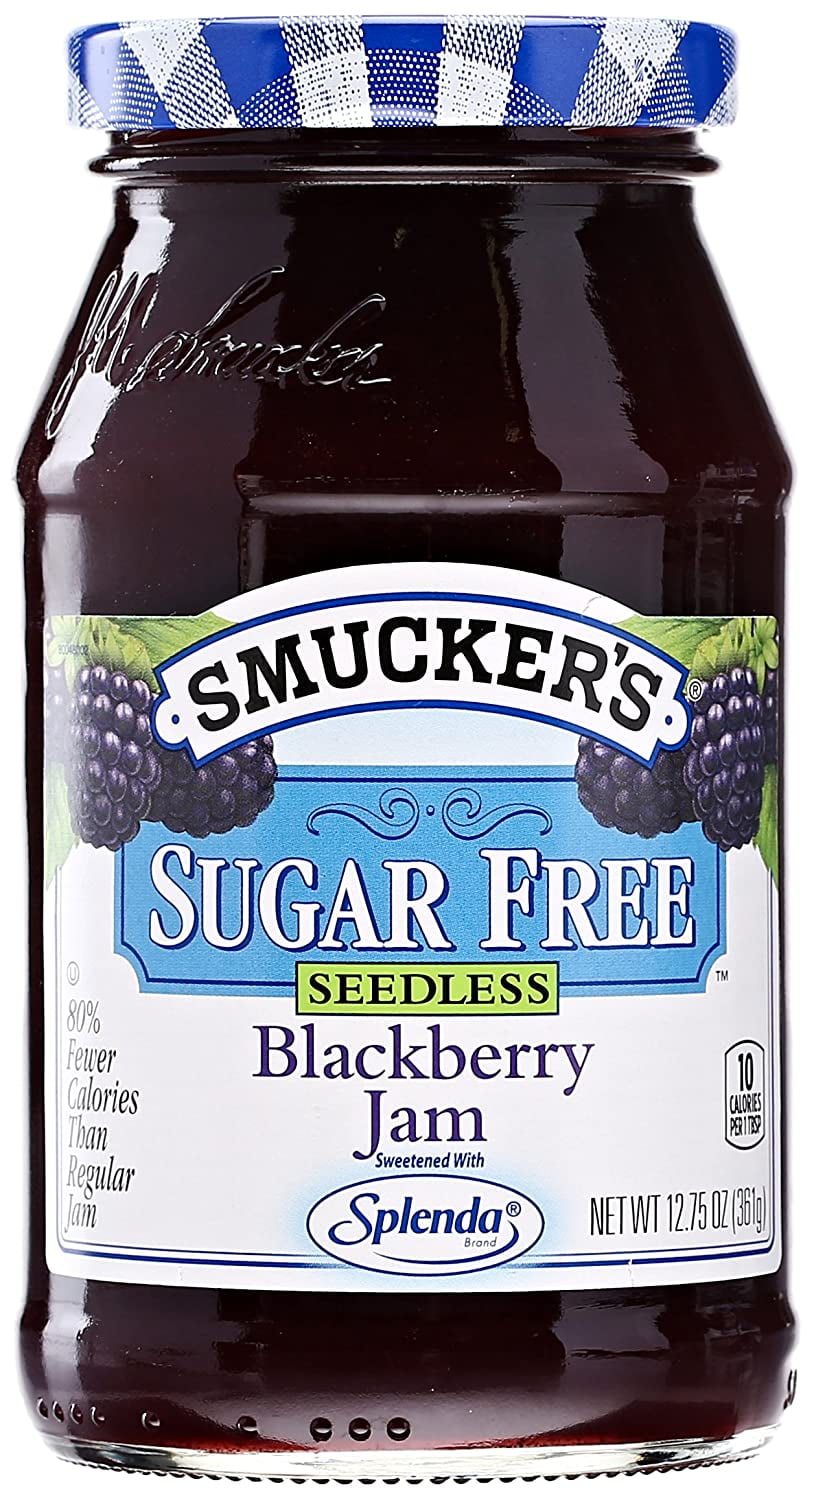 Smuckers Sugar Free Seedless Blackberry Jam with Splenda Brand Sweetener, 1...